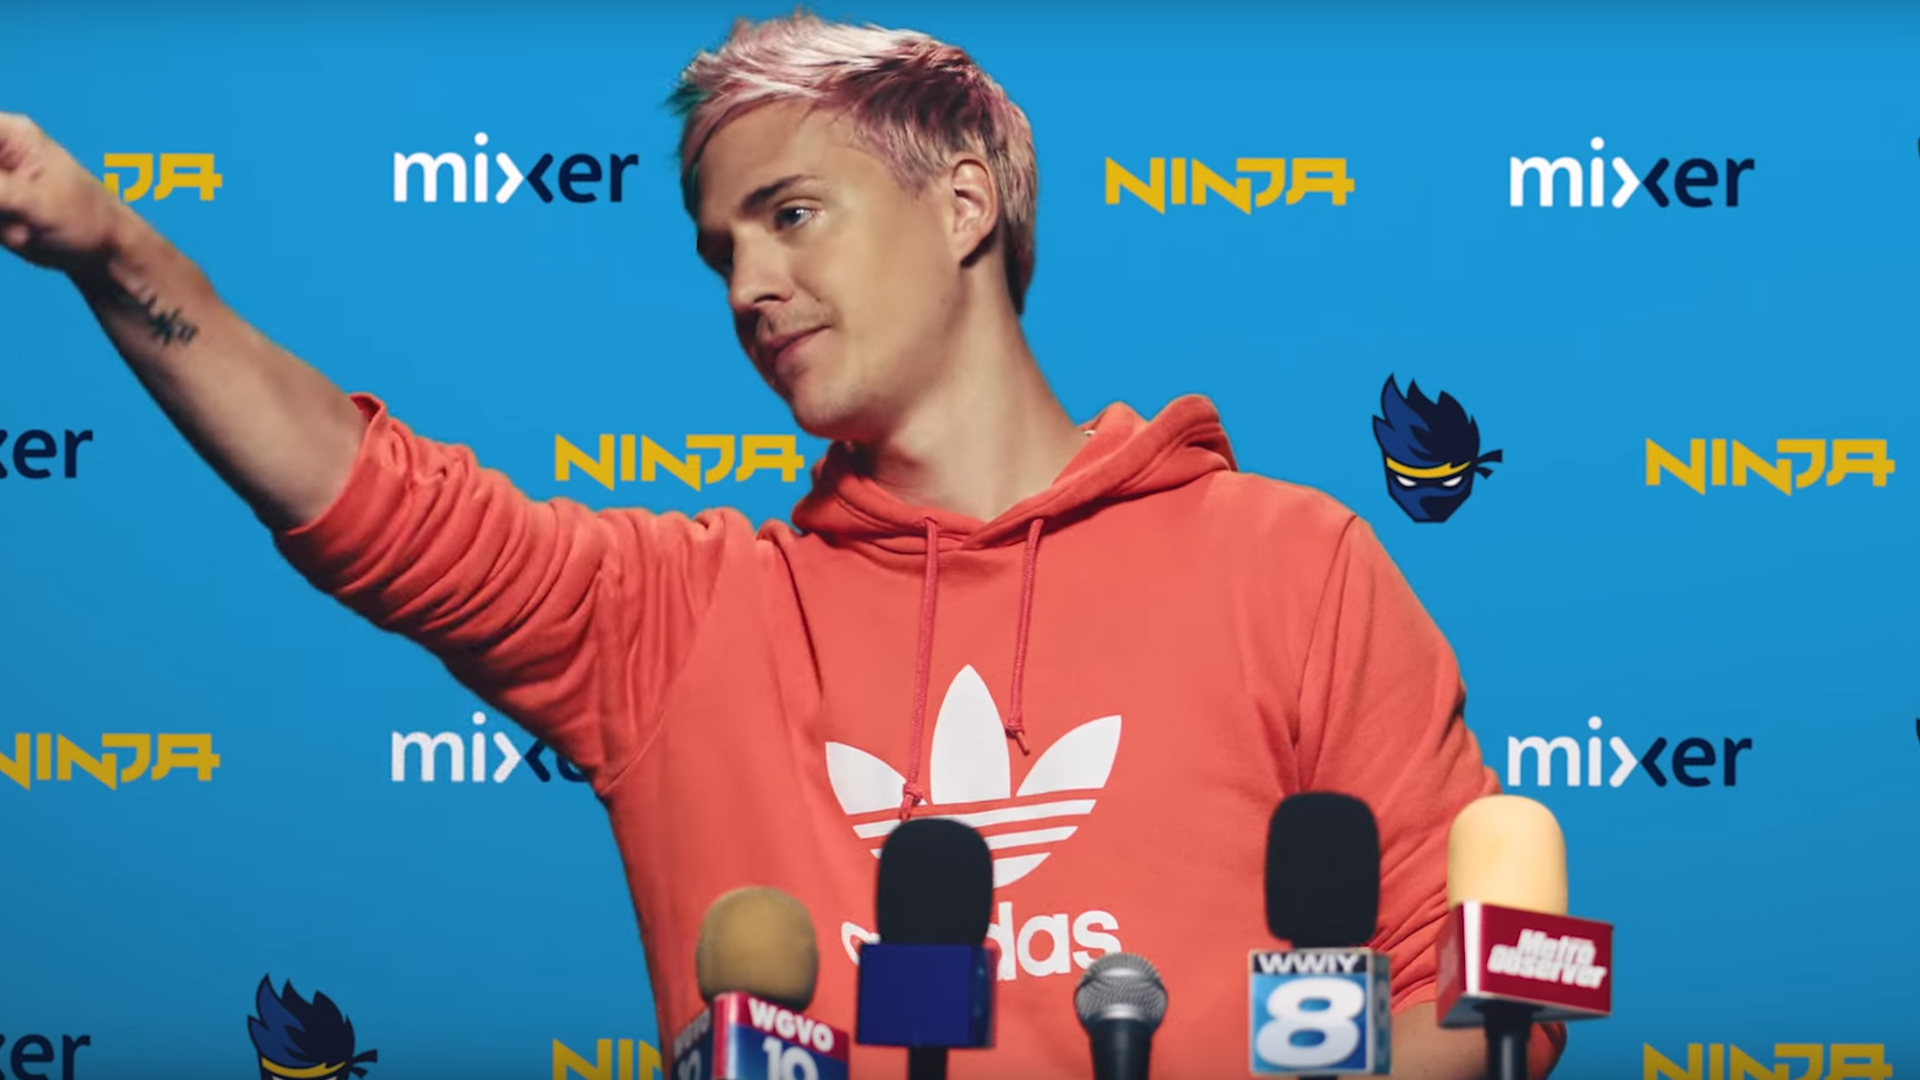 Ninja Mixer